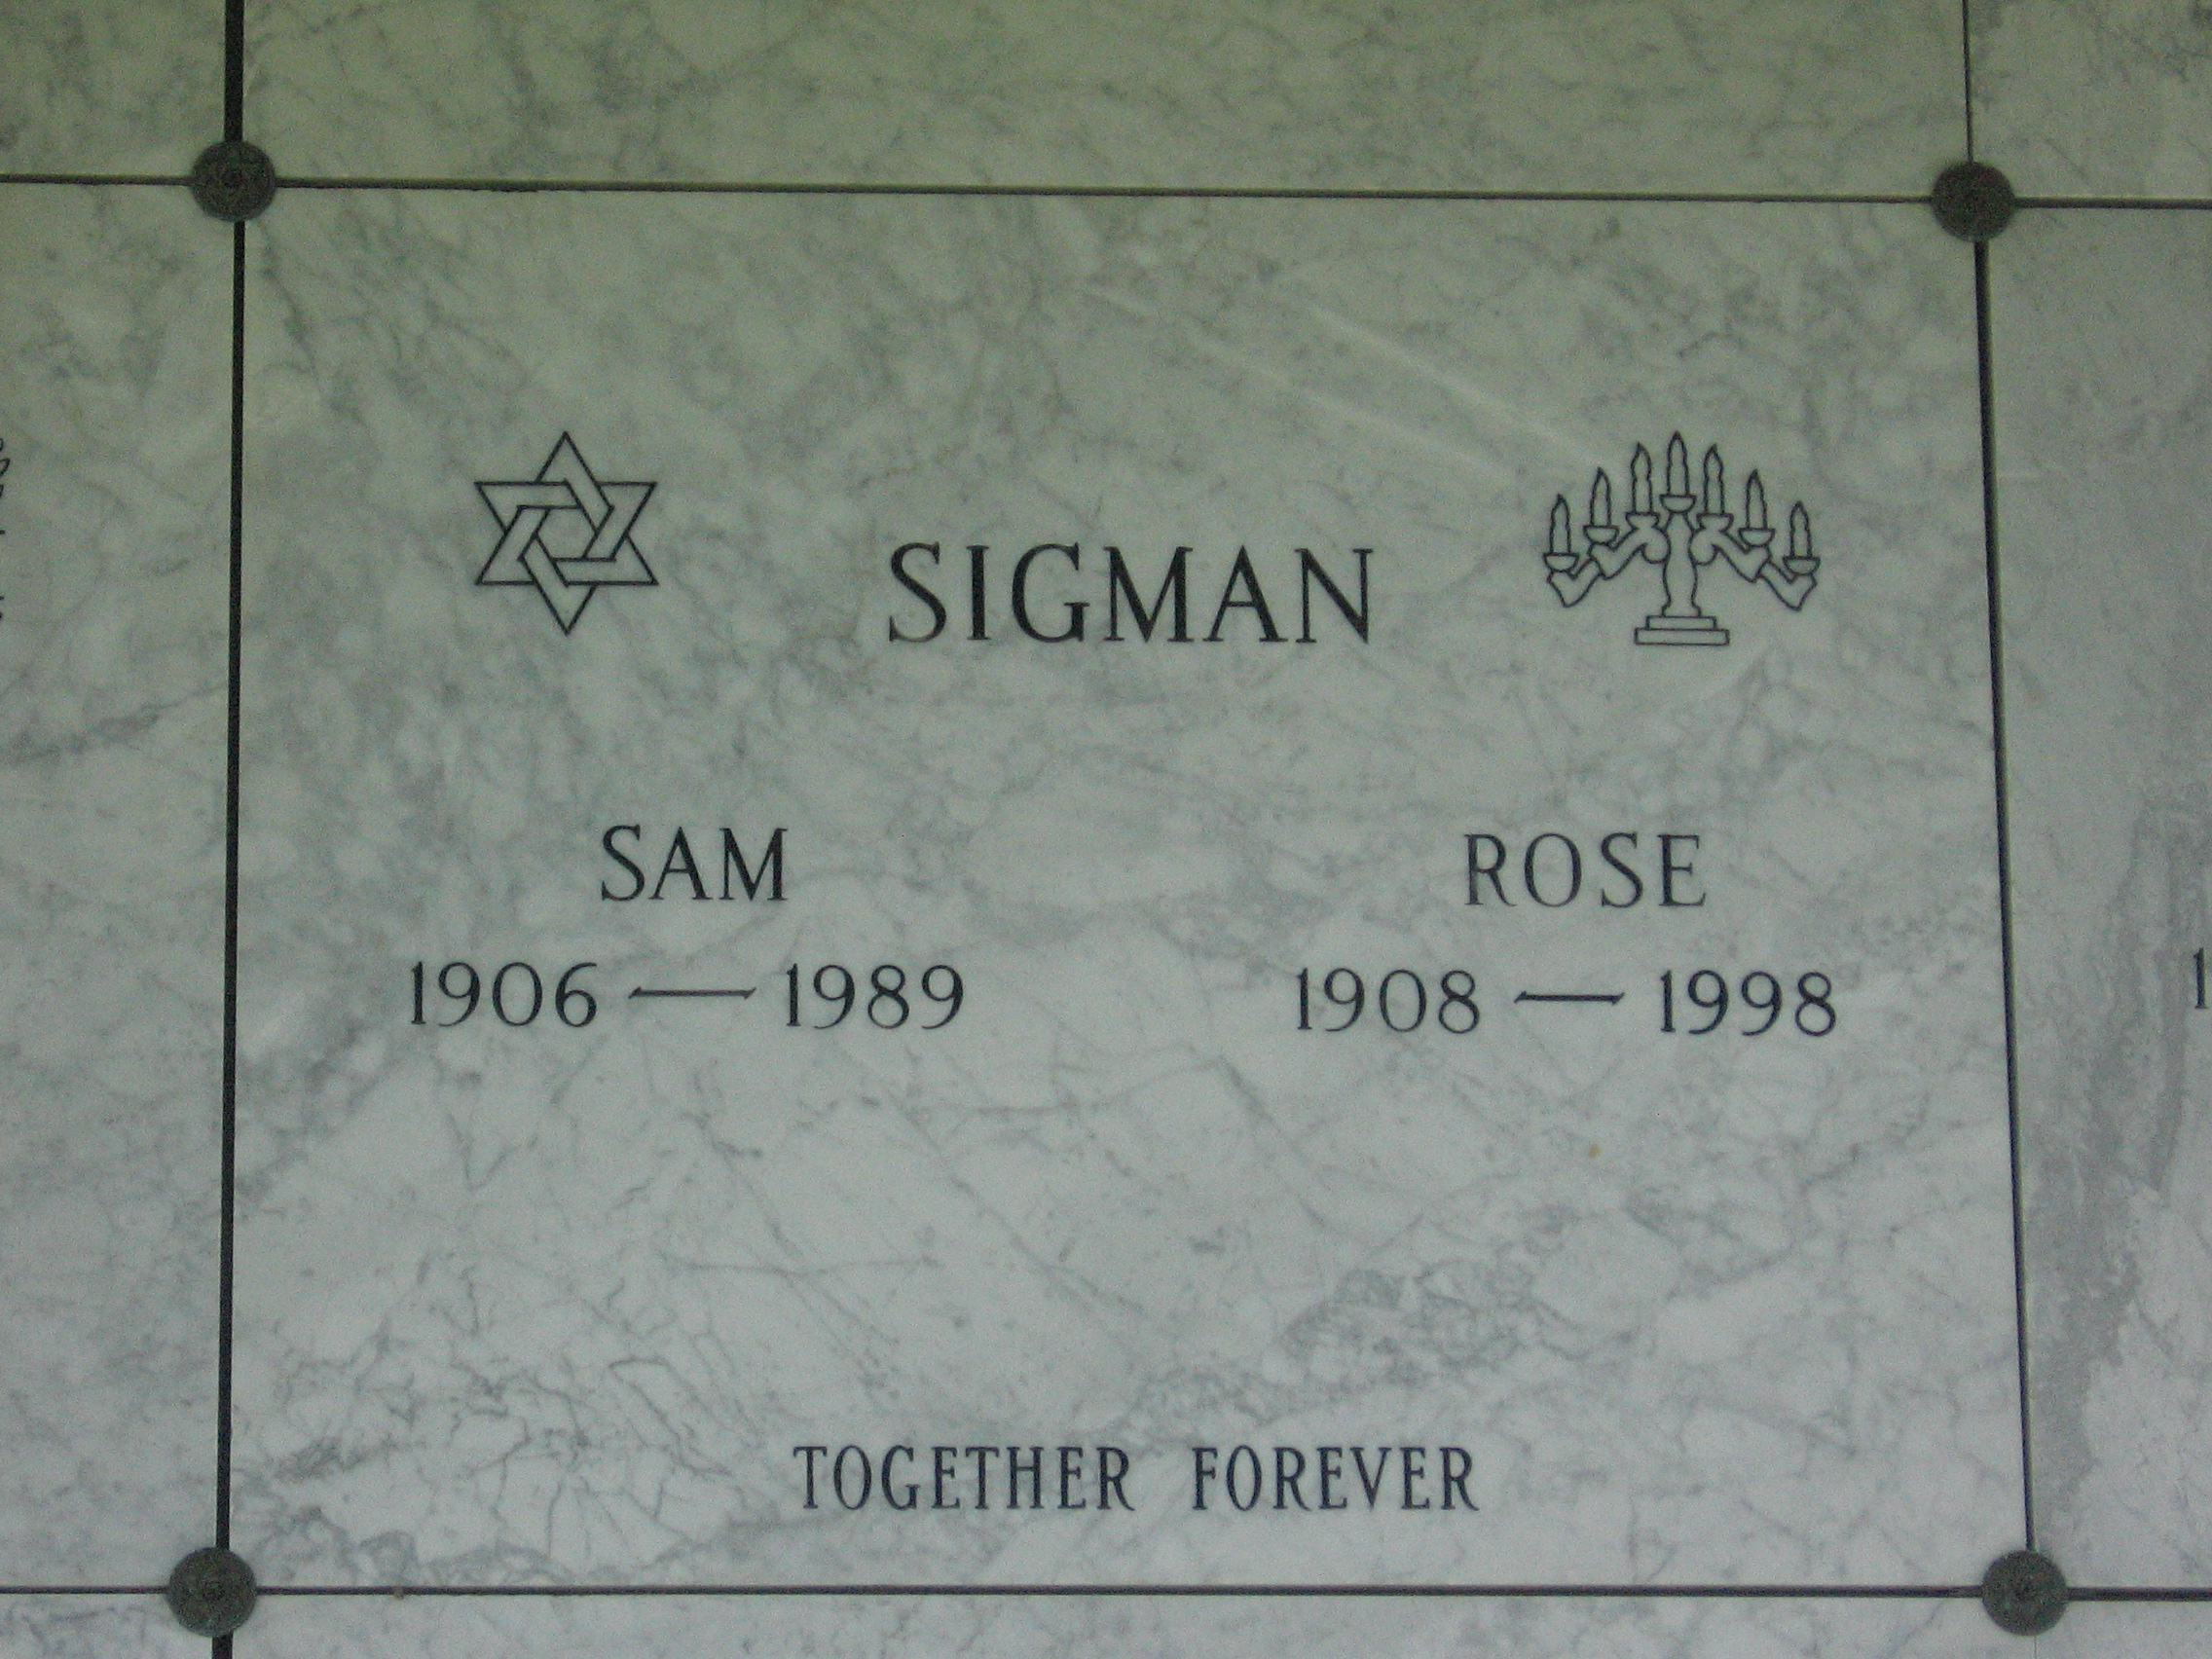 Sam Sigman